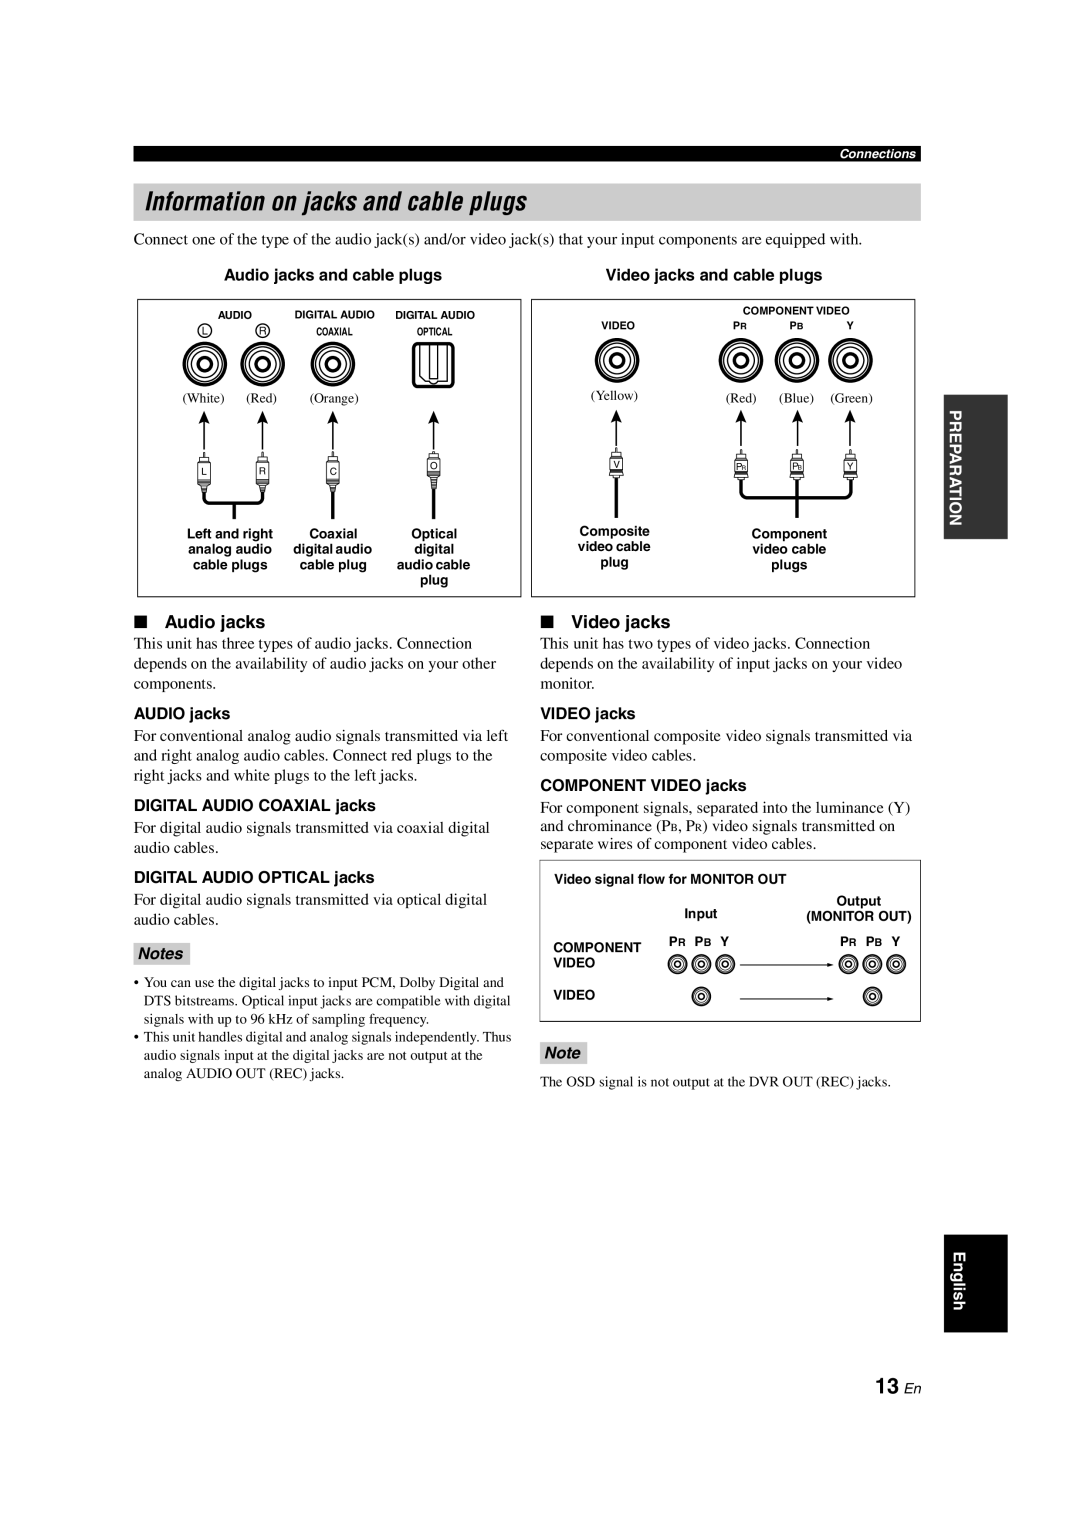 Yamaha RX-V463 owner manual Information on jacks and cable plugs, 13 En, Audio jacks, Video jacks, Notes 